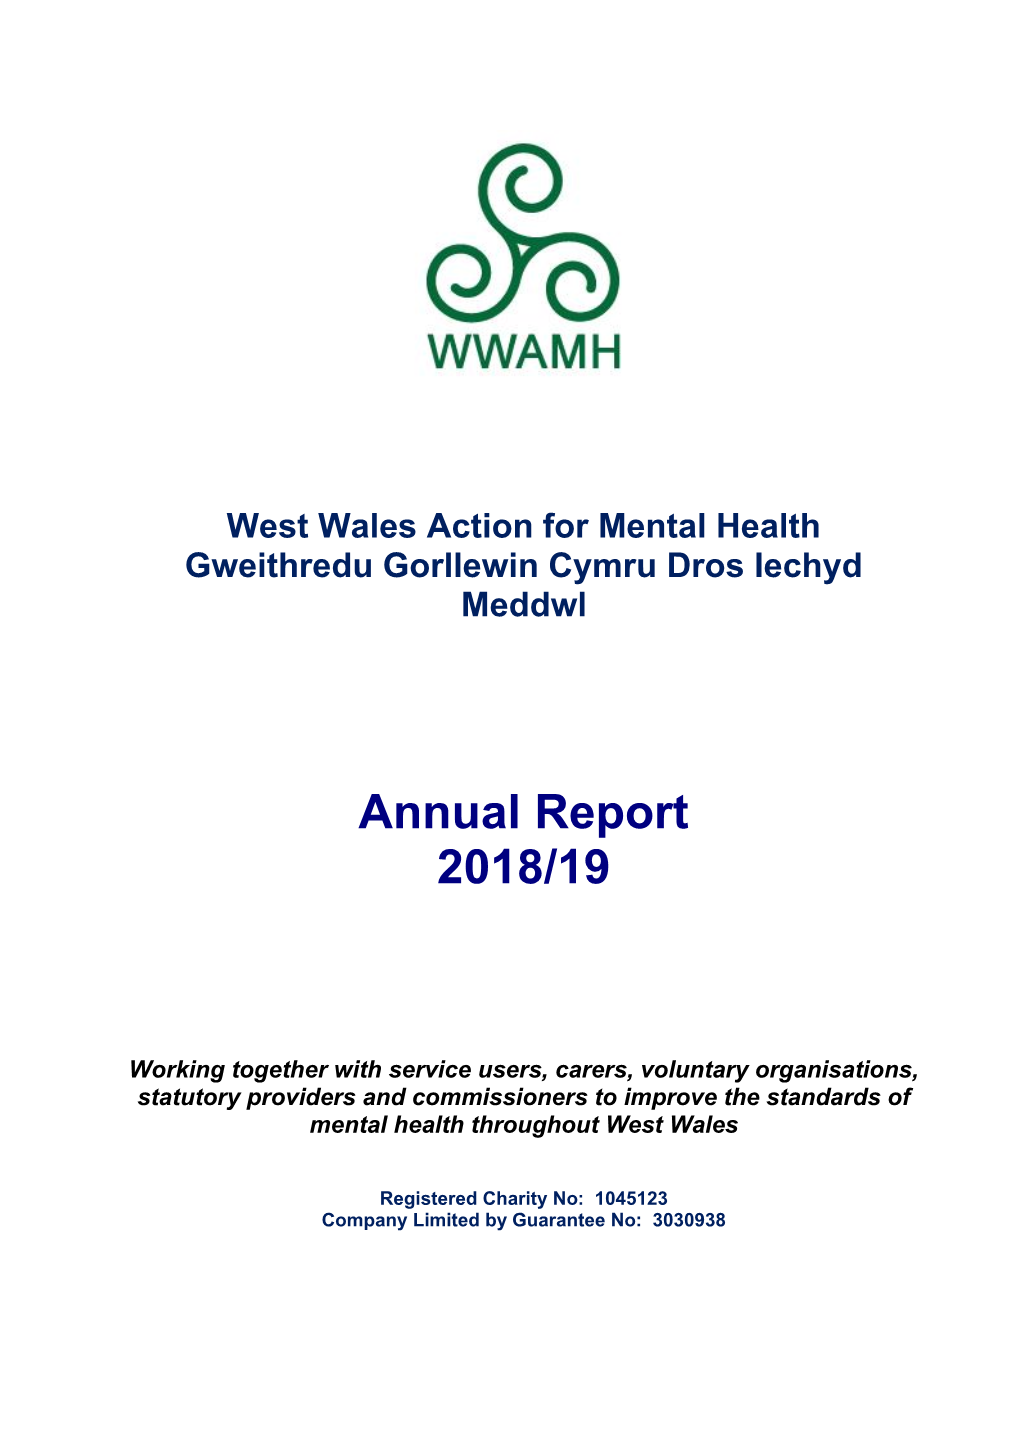 WWAMH Annual Report 2018-2019 English